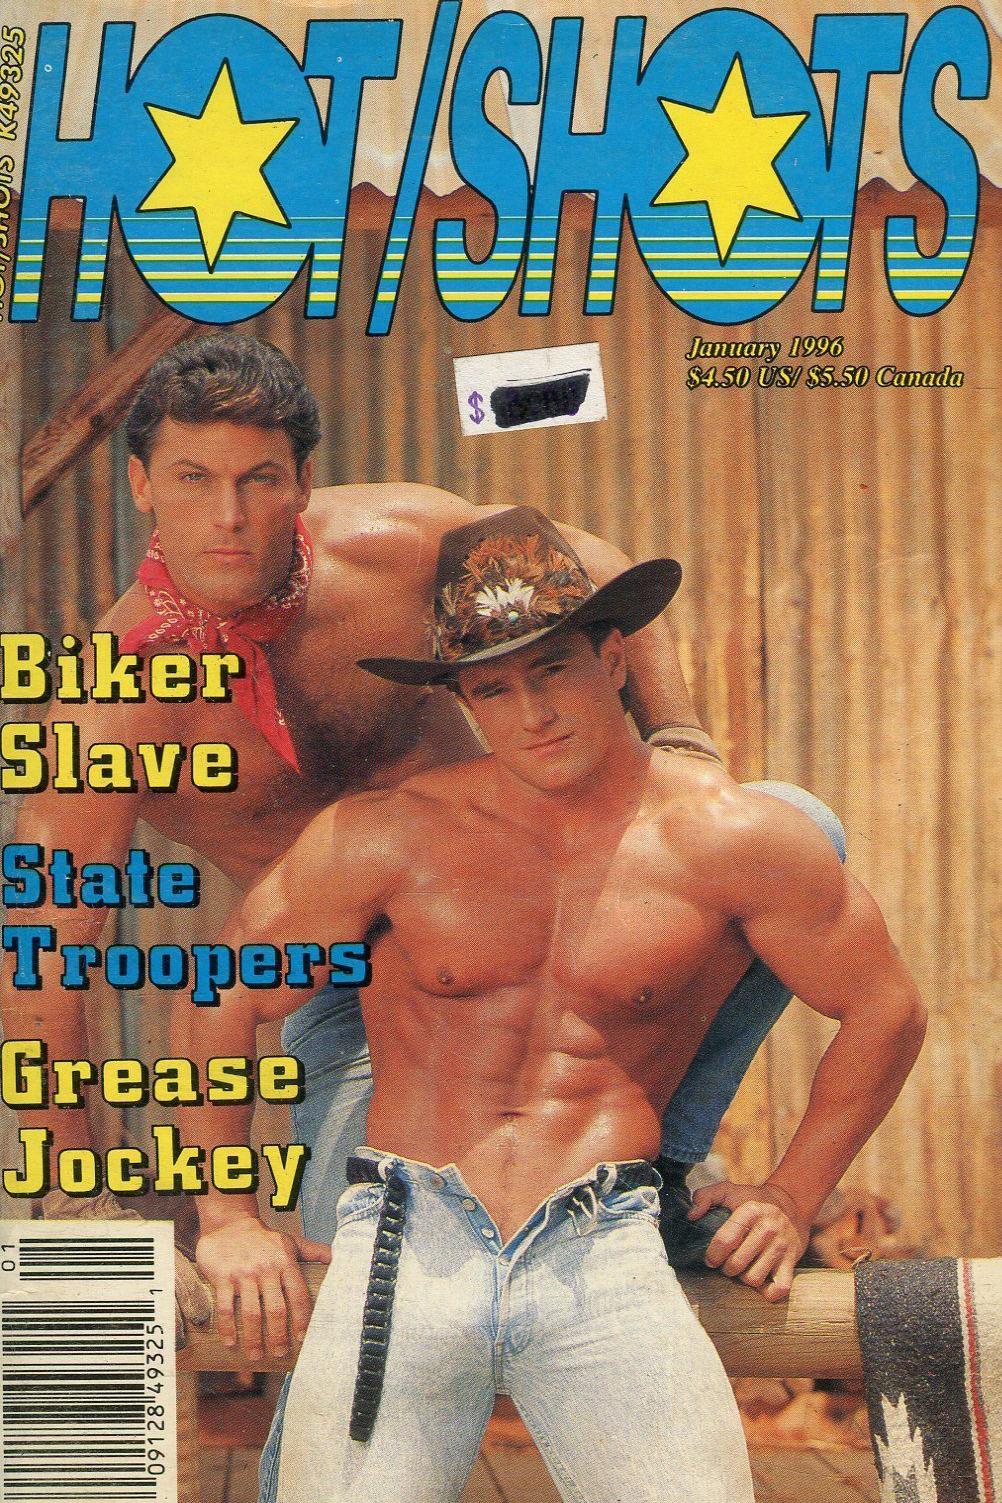 Hot Shots January 1996 magazine back issue Hot Shots by Year magizine back copy 